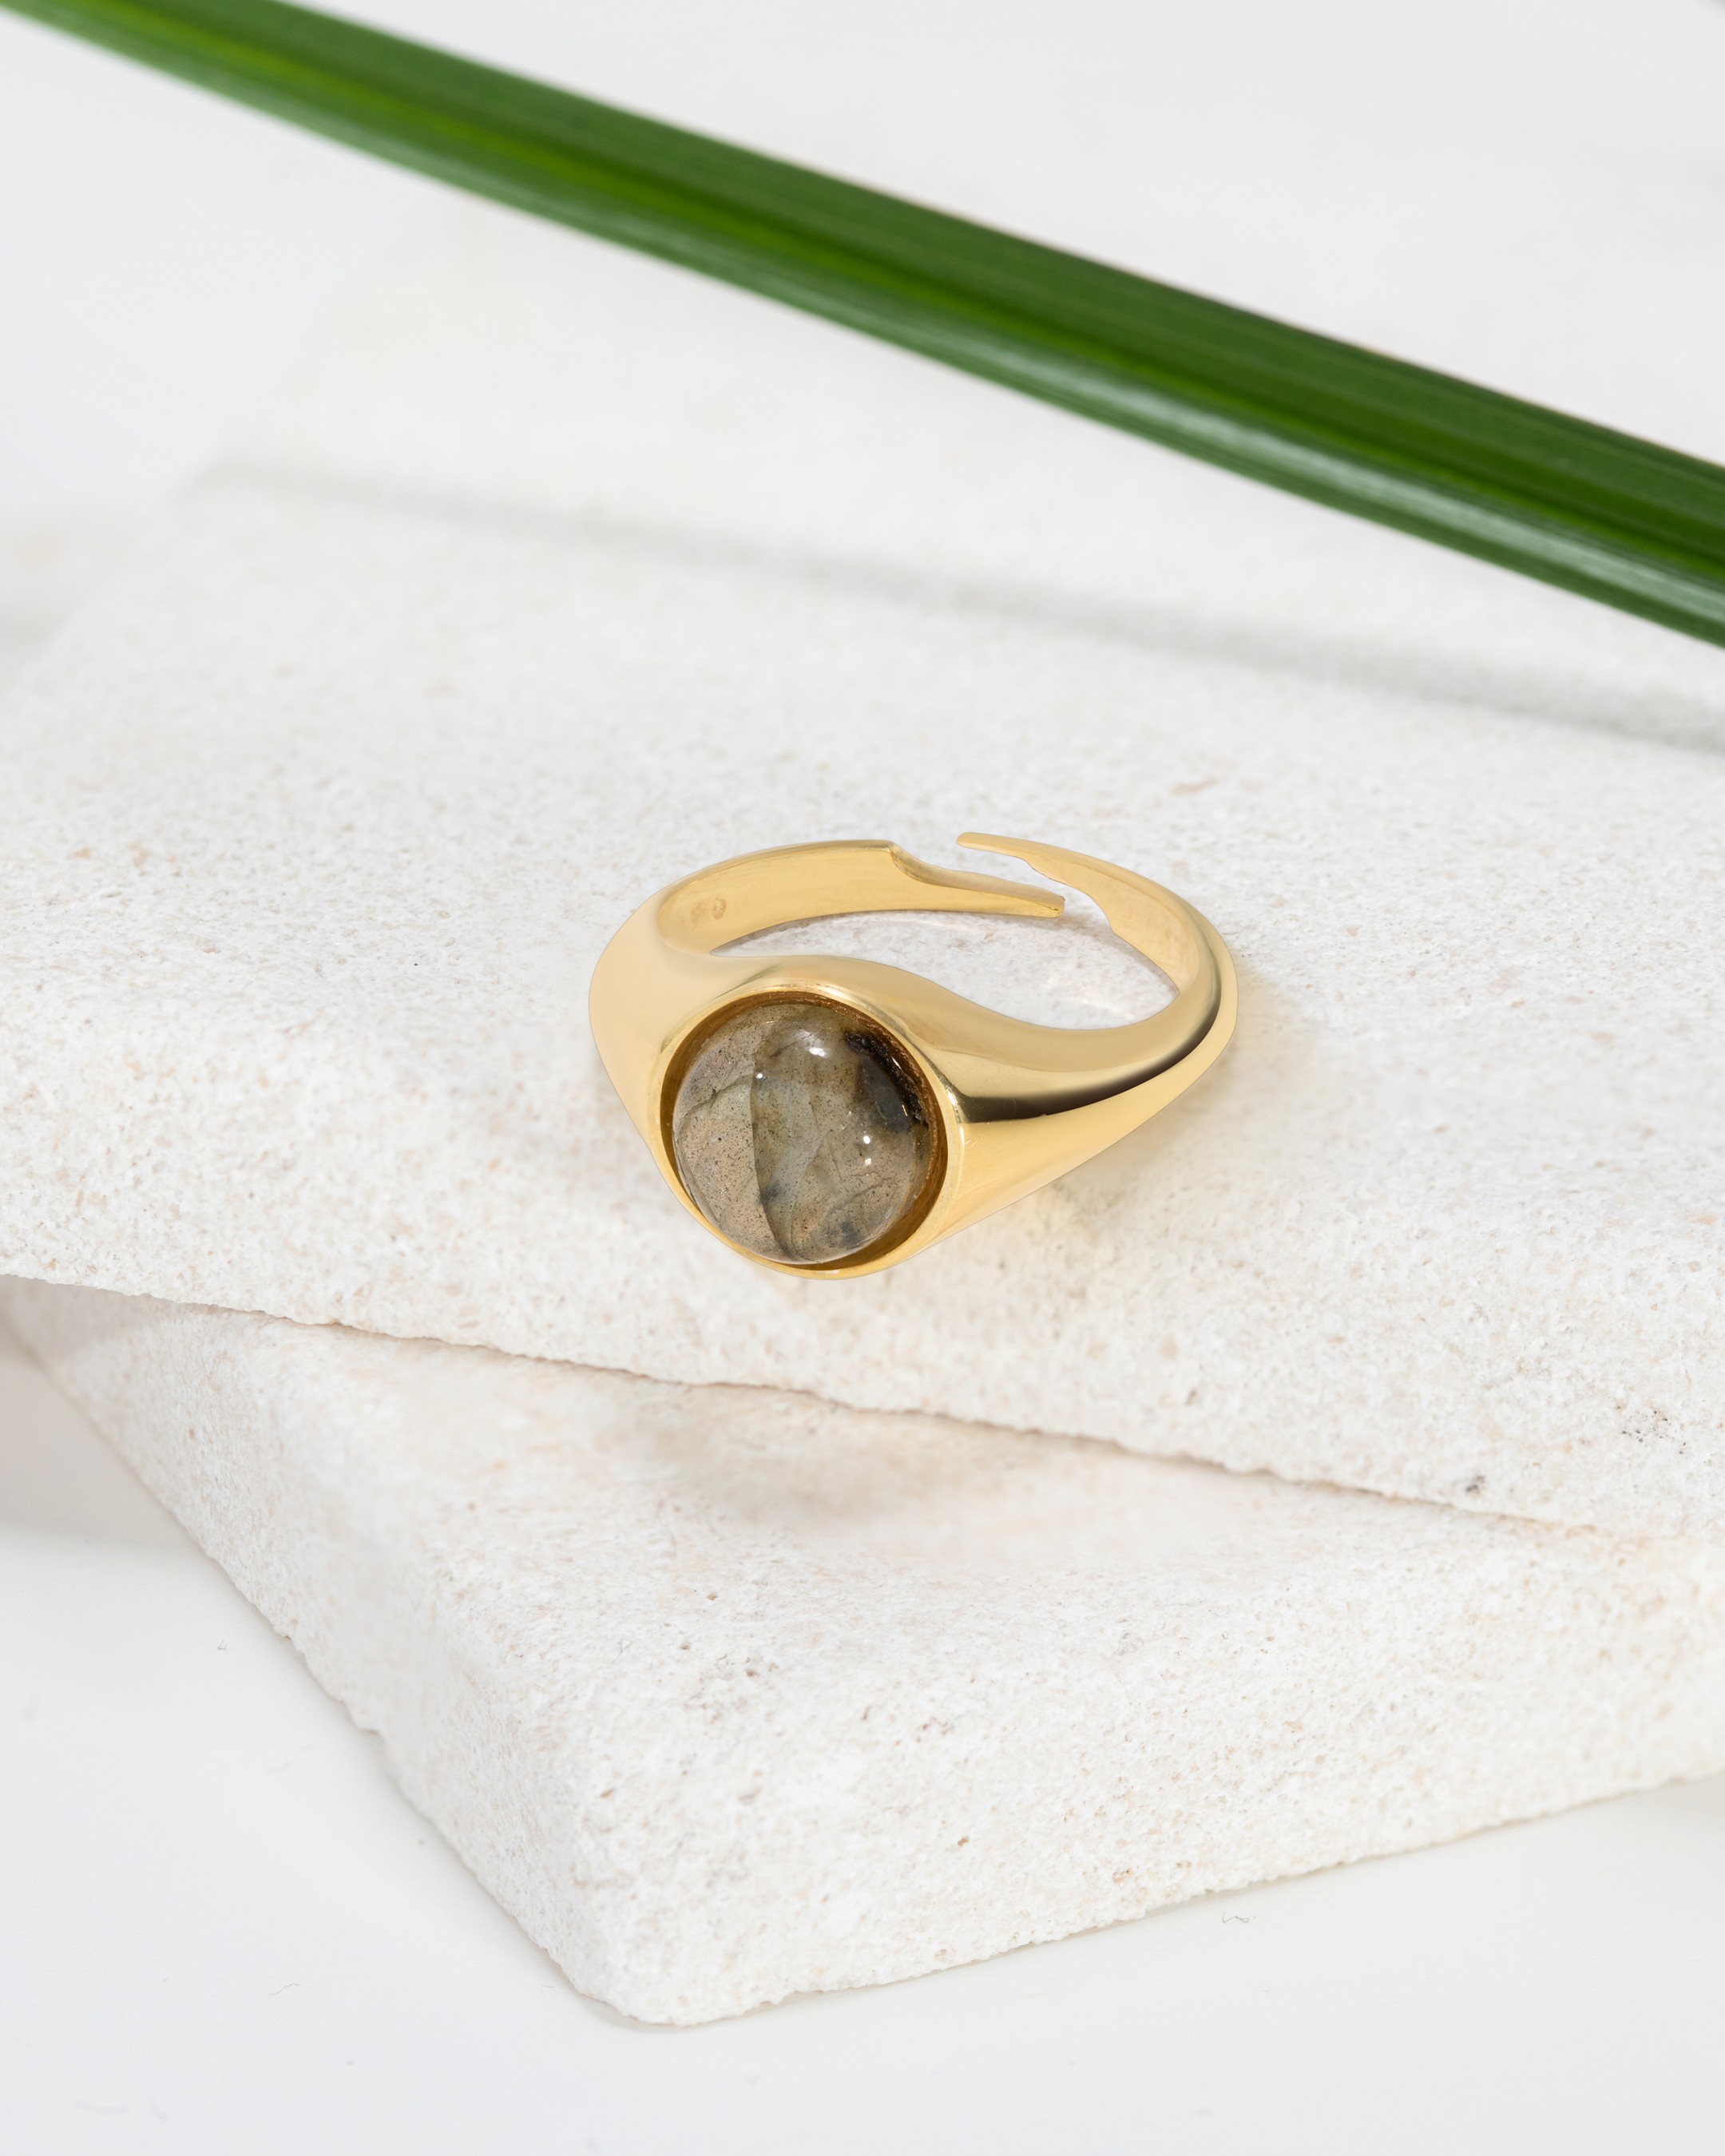 Silver Calypso Ring with Labradorite Stone - Gold